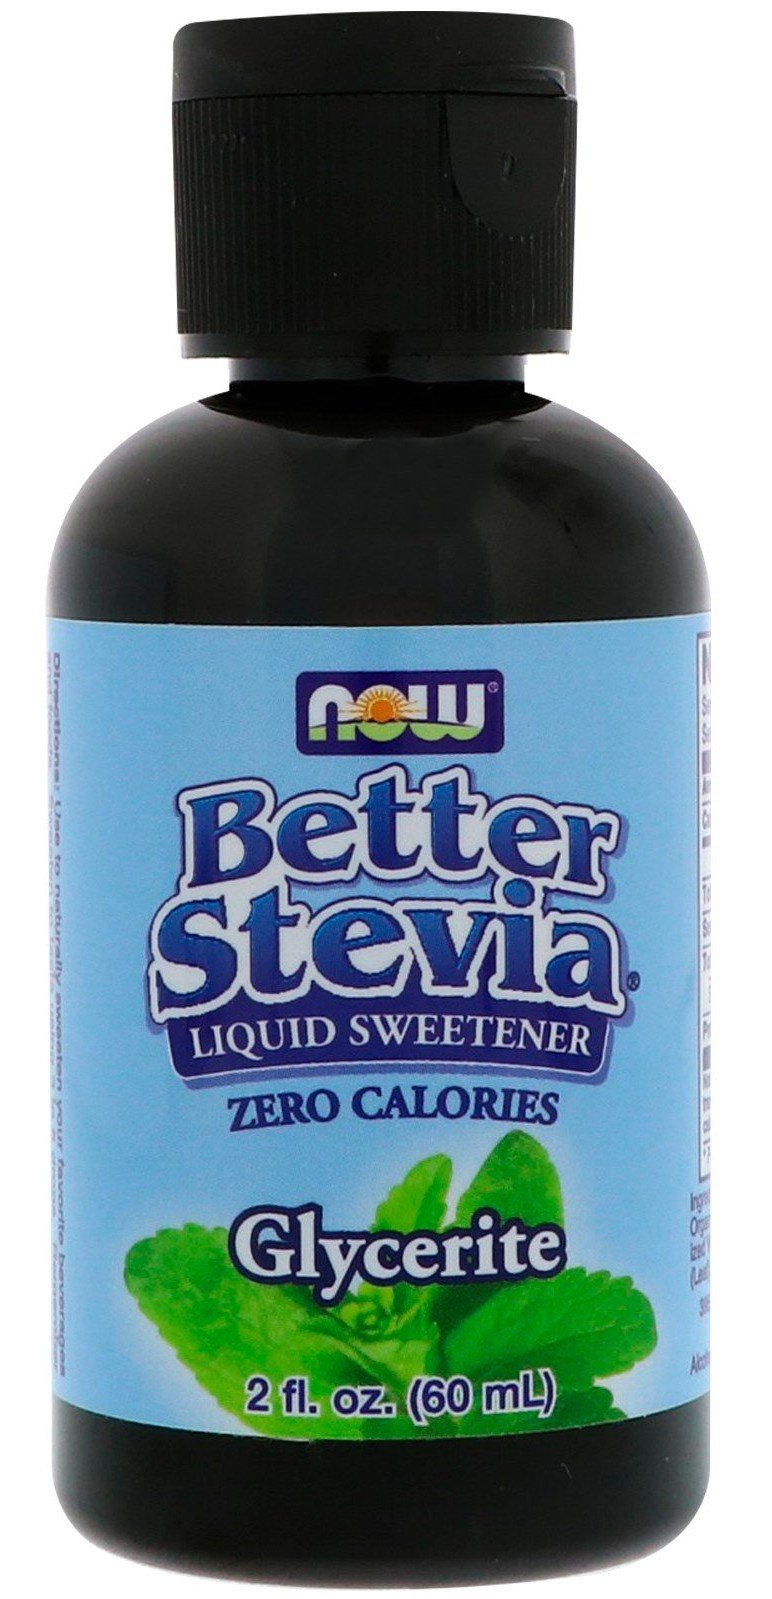 Better Stevia Liquid, 60 ml, Now. Suplementos especiales. 